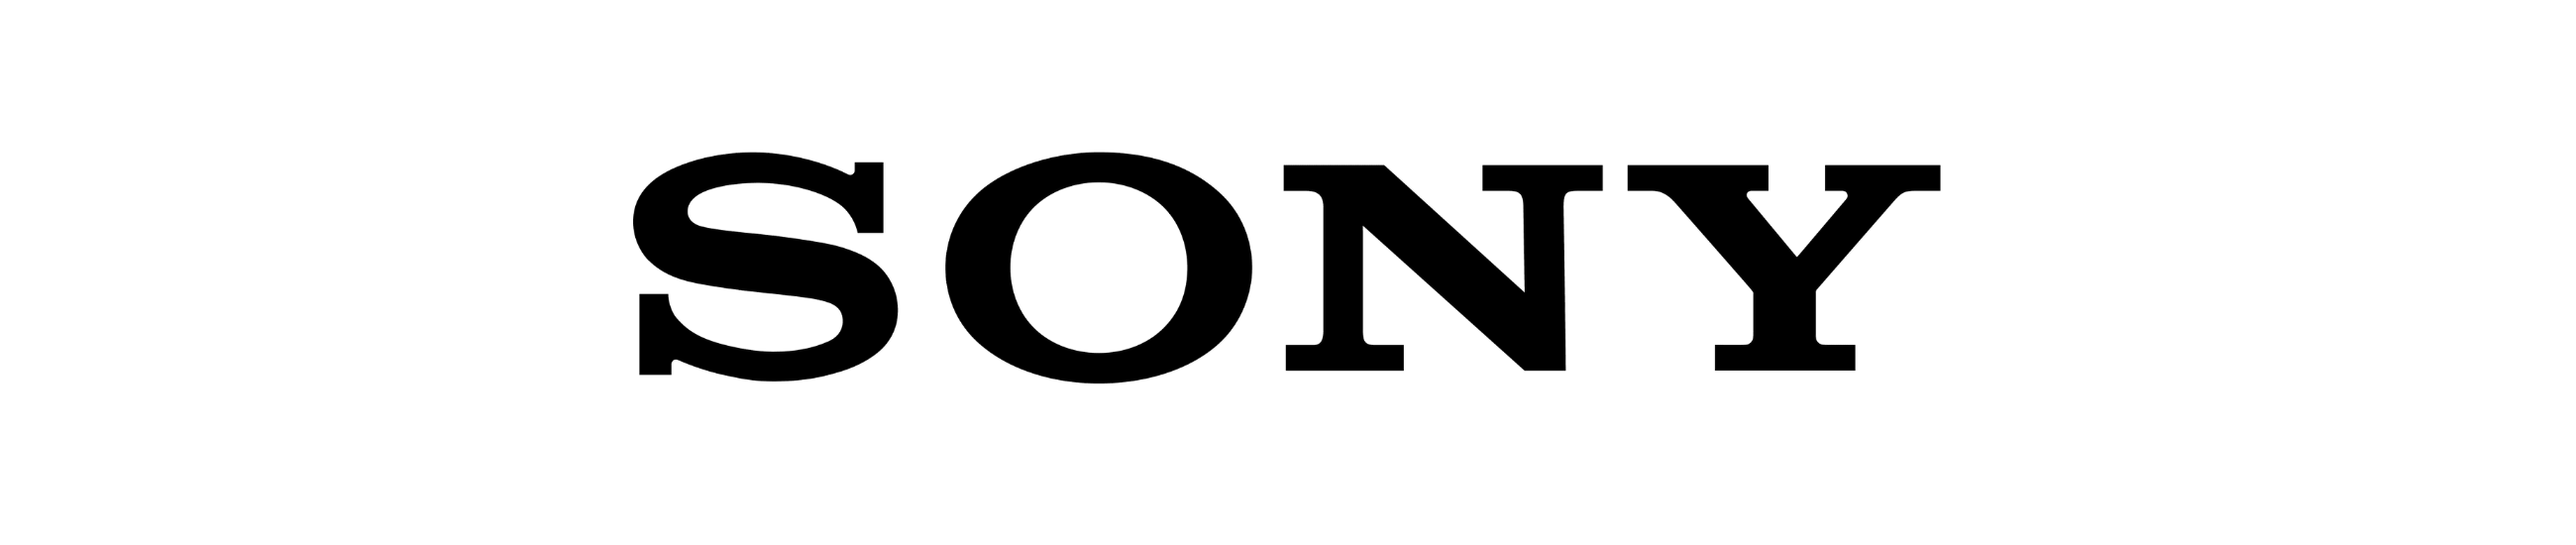 sony audio logo